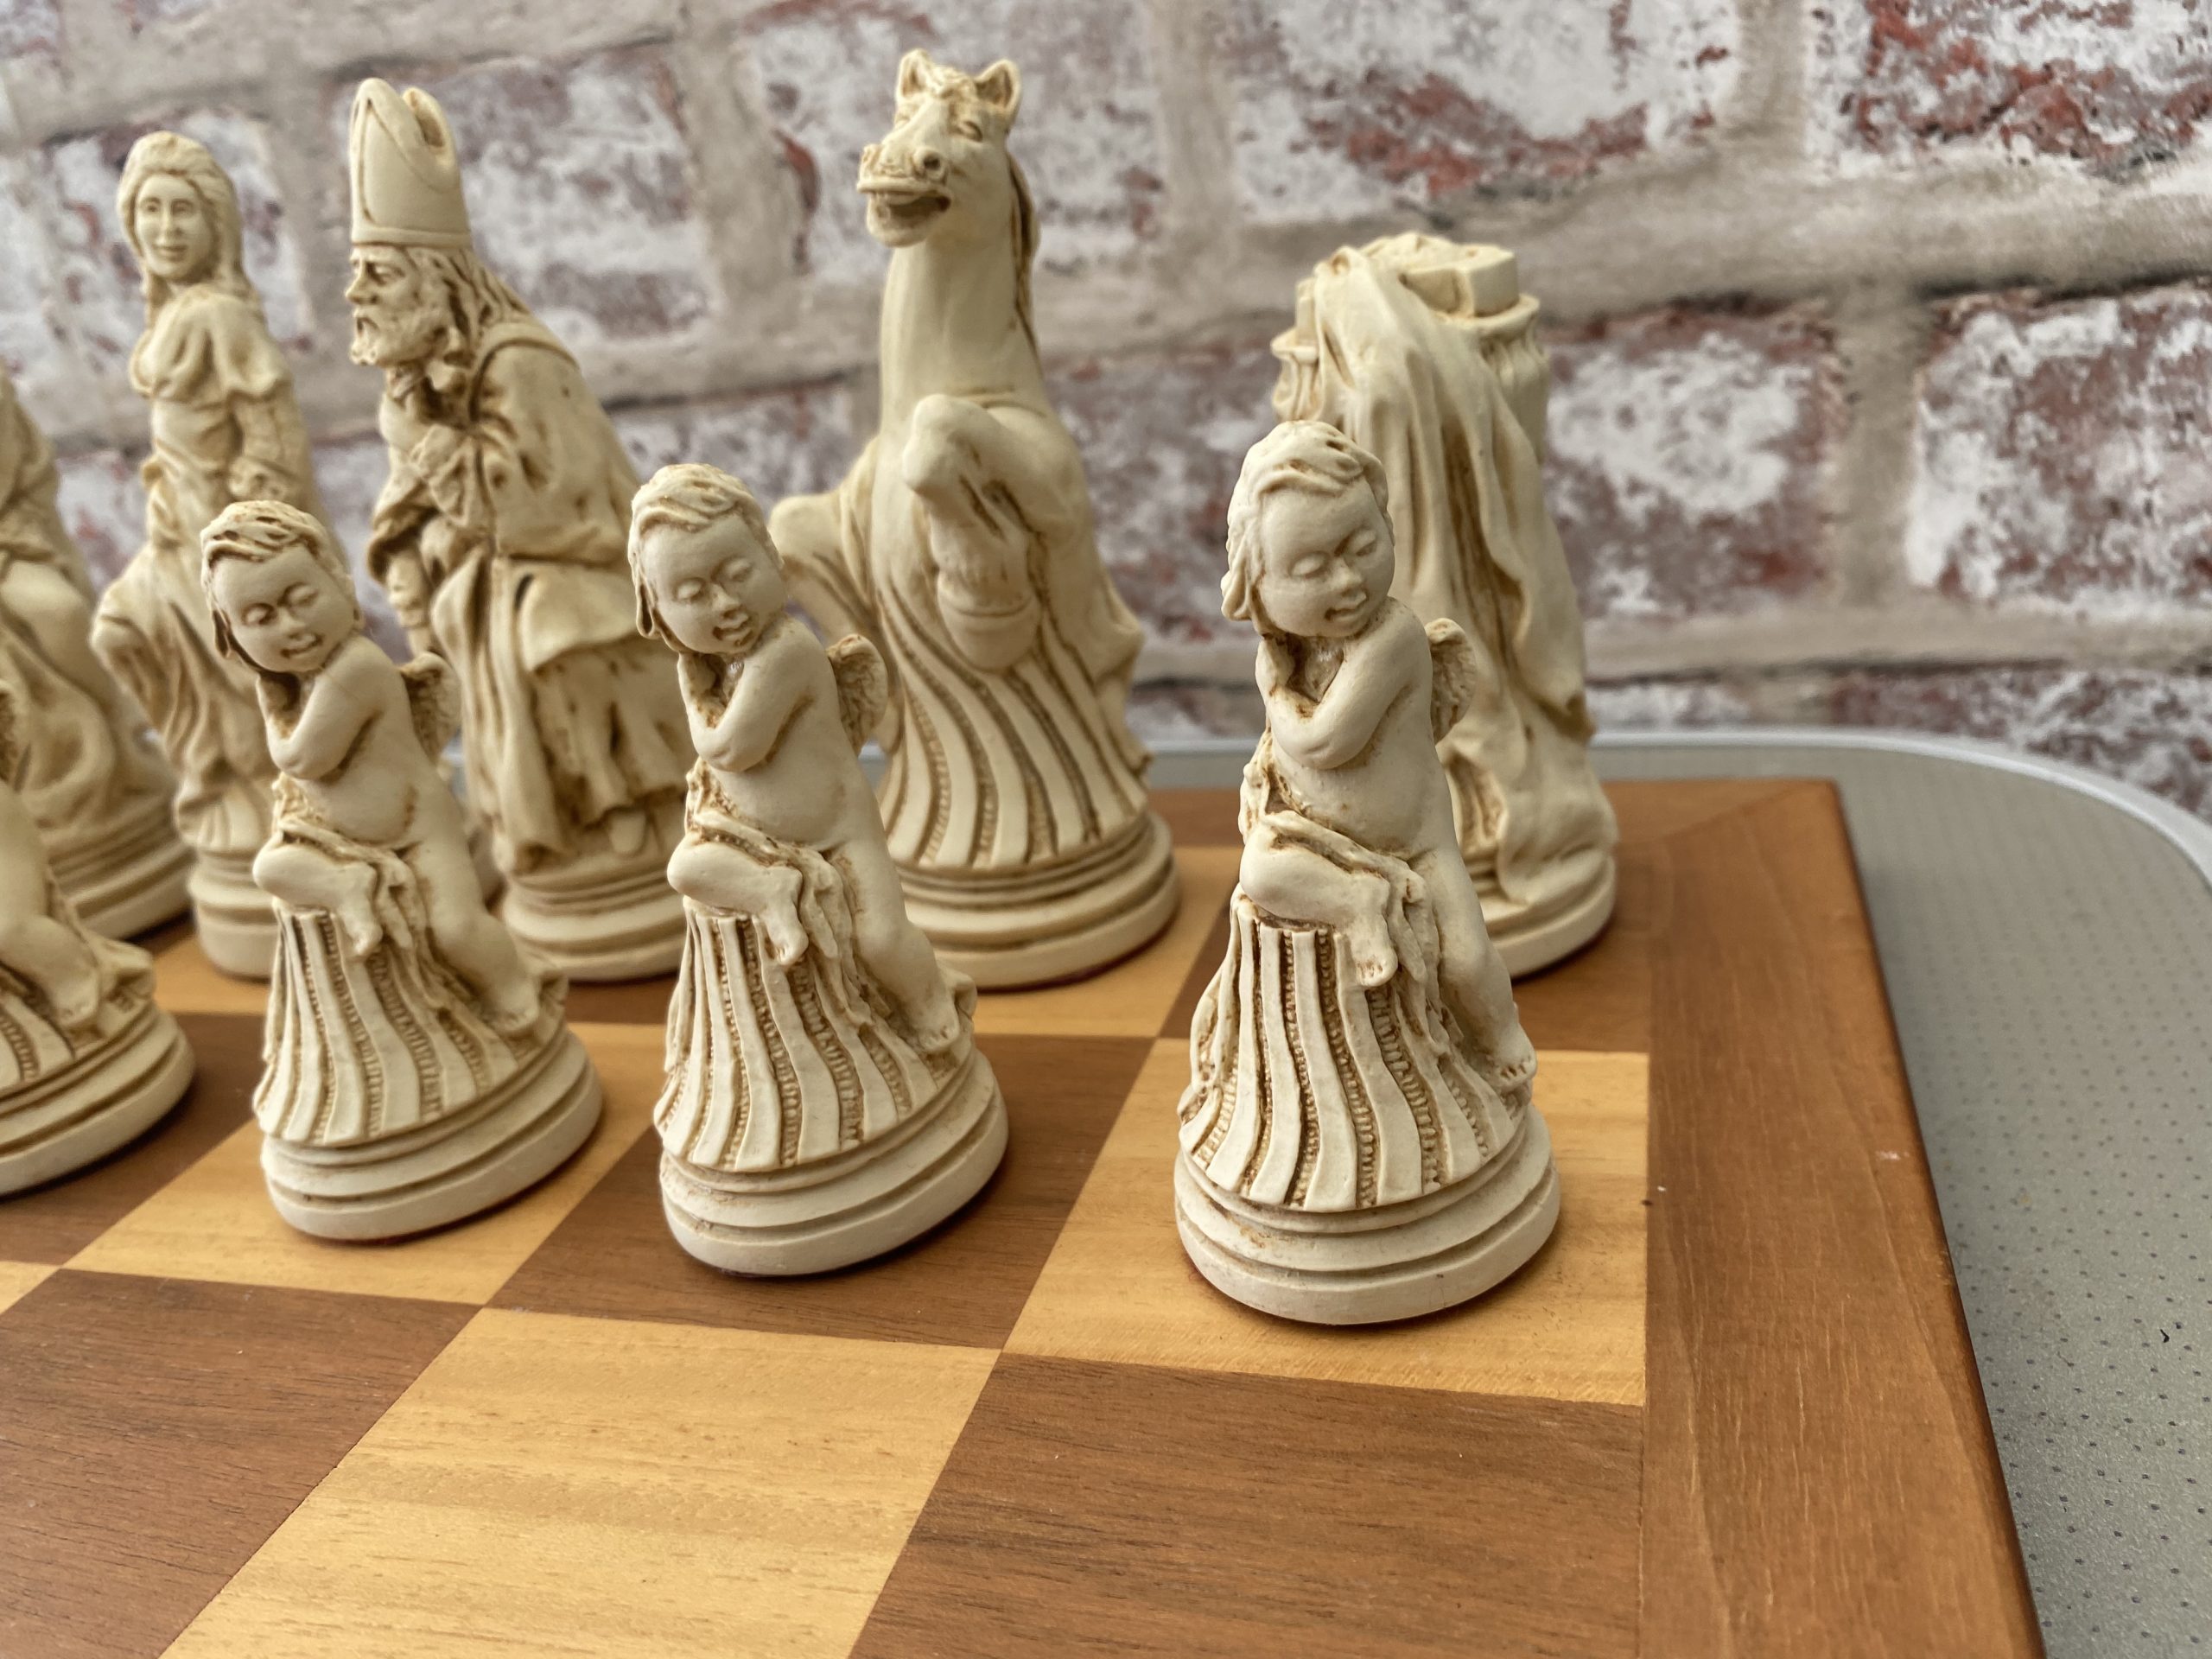 Louis XIV Chess Set - ChessBaron Chess Sets USA - Call (213) 325 6540